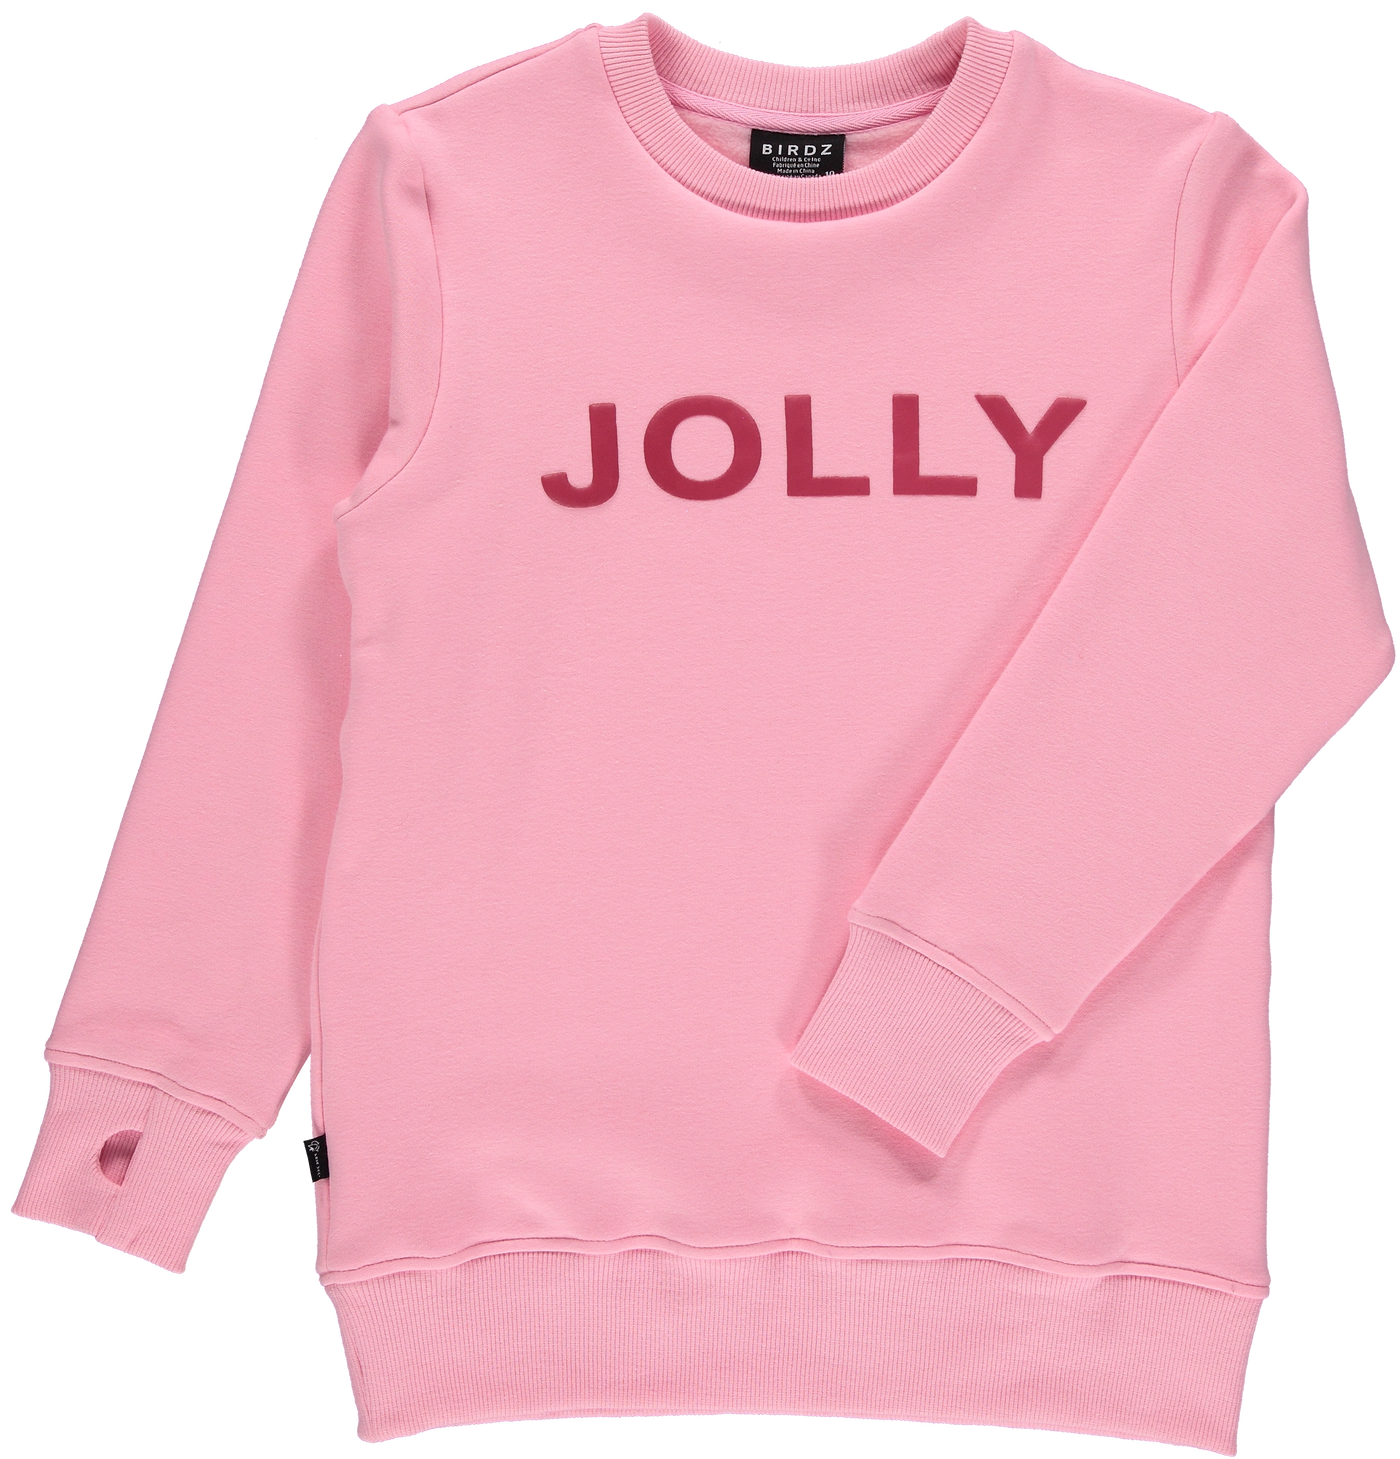 Jolly Sweat |Cotton Candy| Kidz